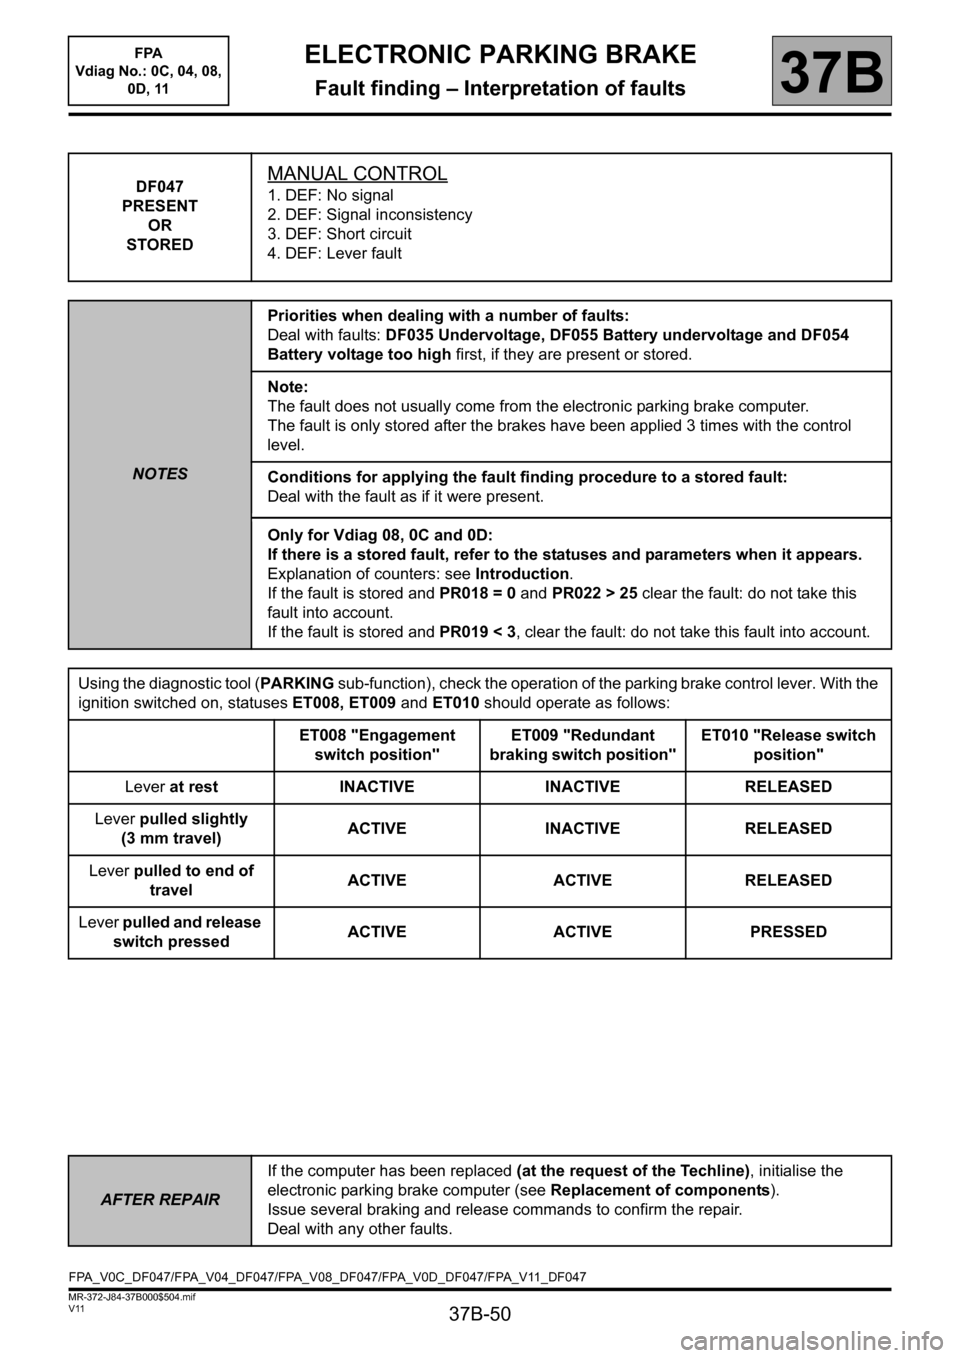 RENAULT SCENIC 2013 J95 / 3.G Electronic Parking Brake Service Manual 37B-50
MR-372-J84-37B000$504.mif
V11
ELECTRONIC PARKING BRAKE
Fault finding – Interpretation of faults
FPA  
Vdiag No.: 0C, 04, 08, 
0D, 11
37B
DF047
PRESENT
OR
STOREDMANUAL CONTROL
1. DEF: No signa